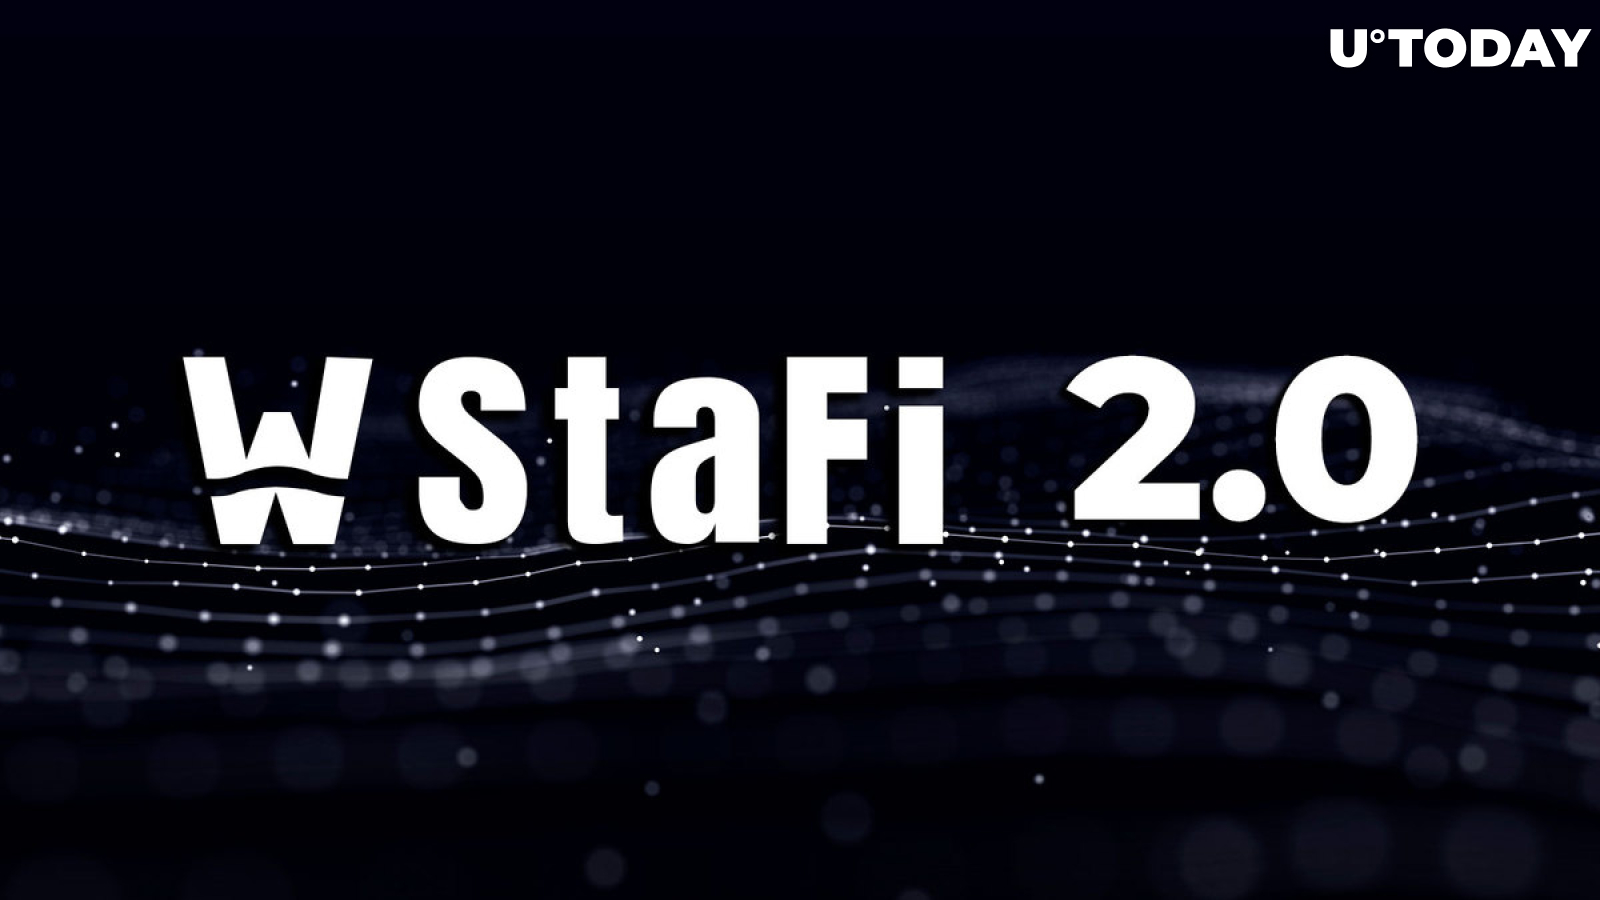 StaFi Announces Liquid-Staking-as-a-Service Testnet Launch, Teases StaFi 2.0 Release